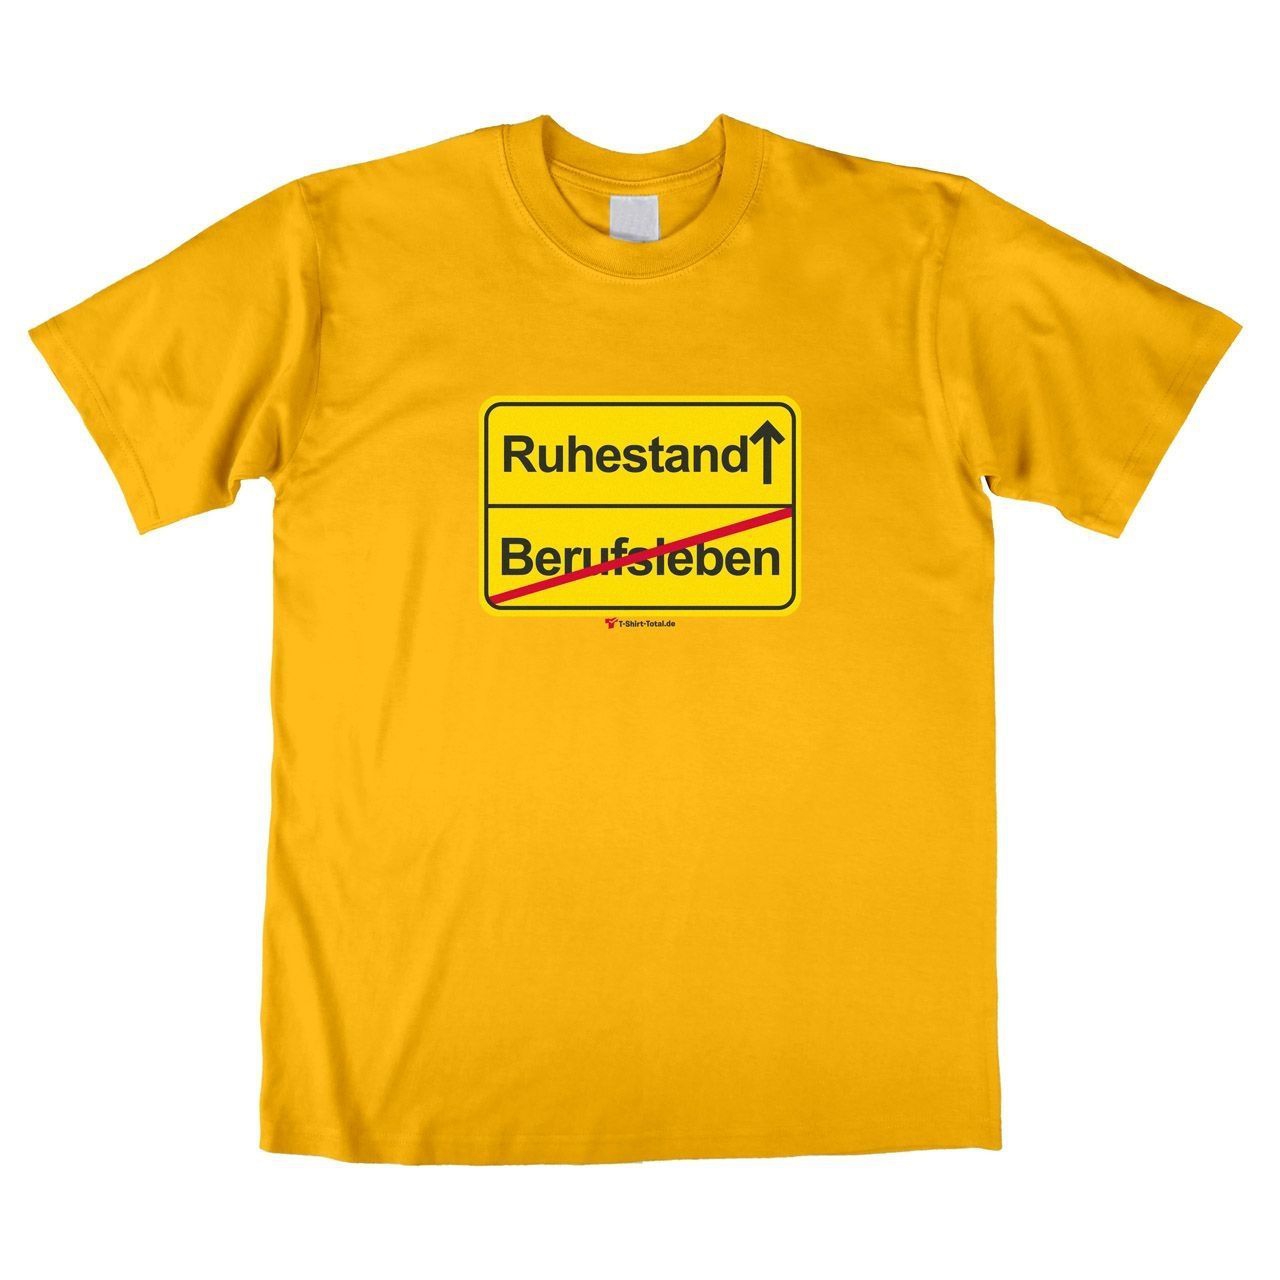 Ruhestand Unisex T-Shirt gelb Large